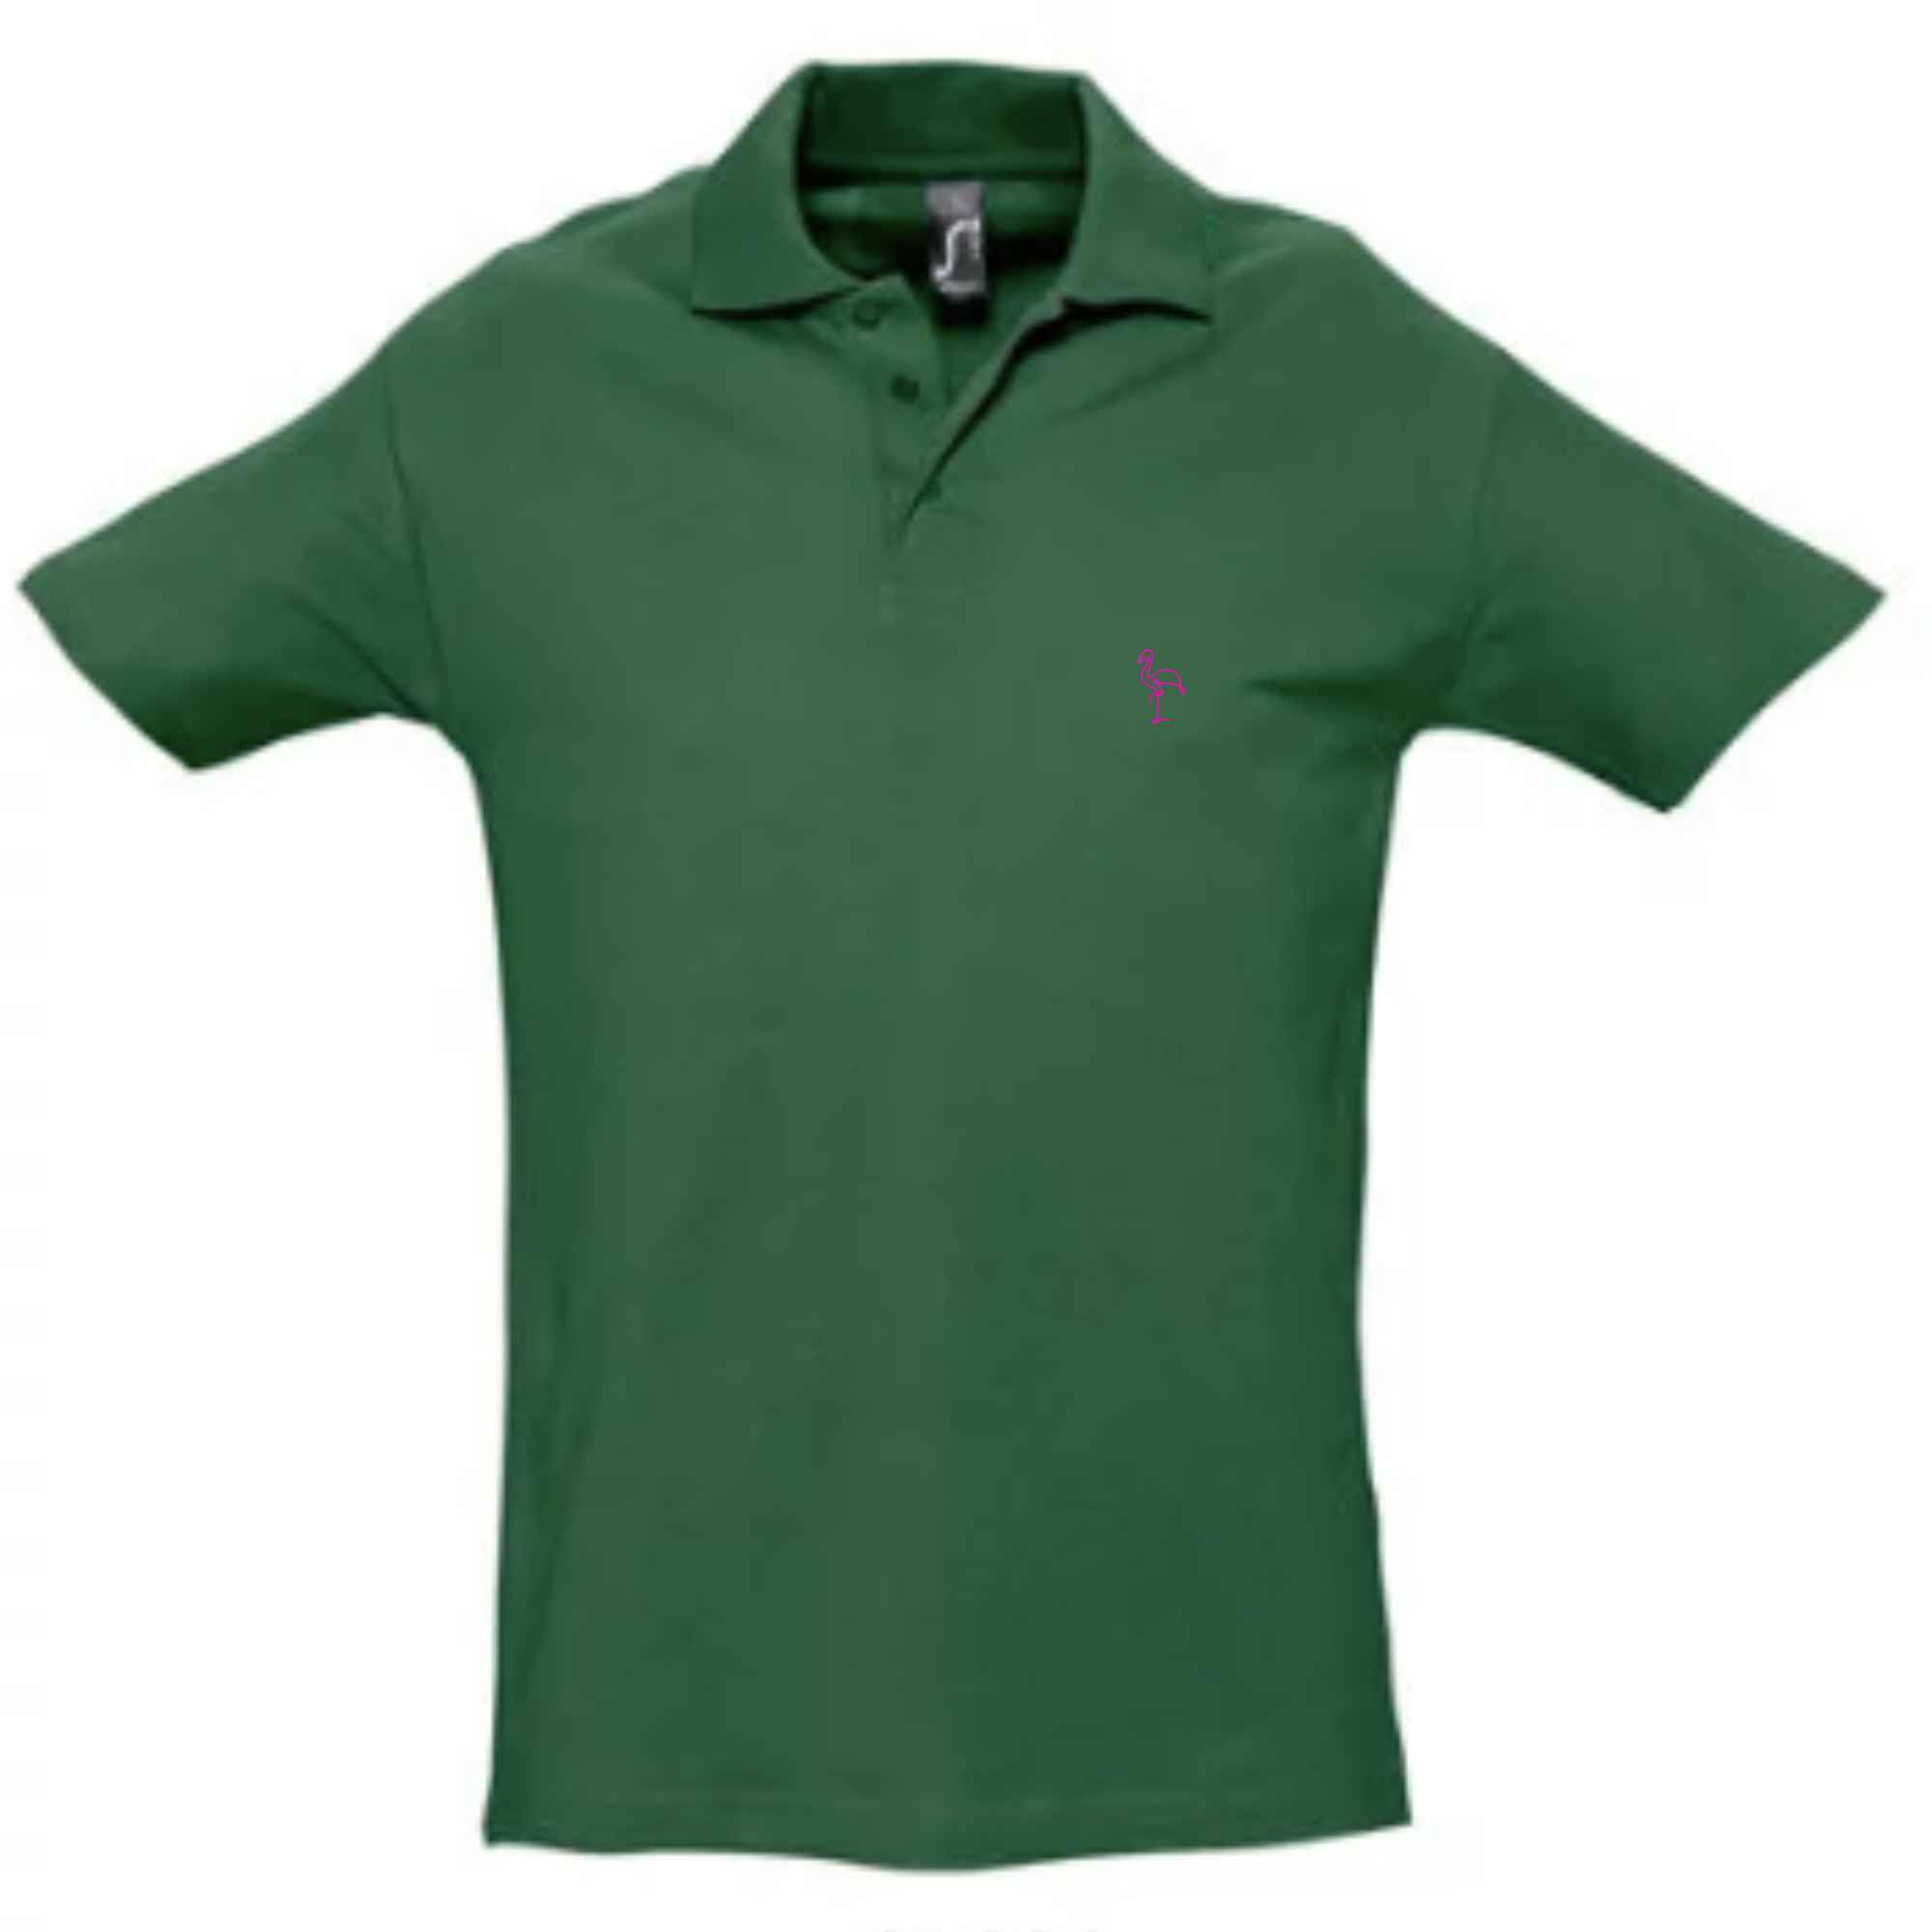 Wald grünes Poloshirt Premium mit Flamingo bestickt